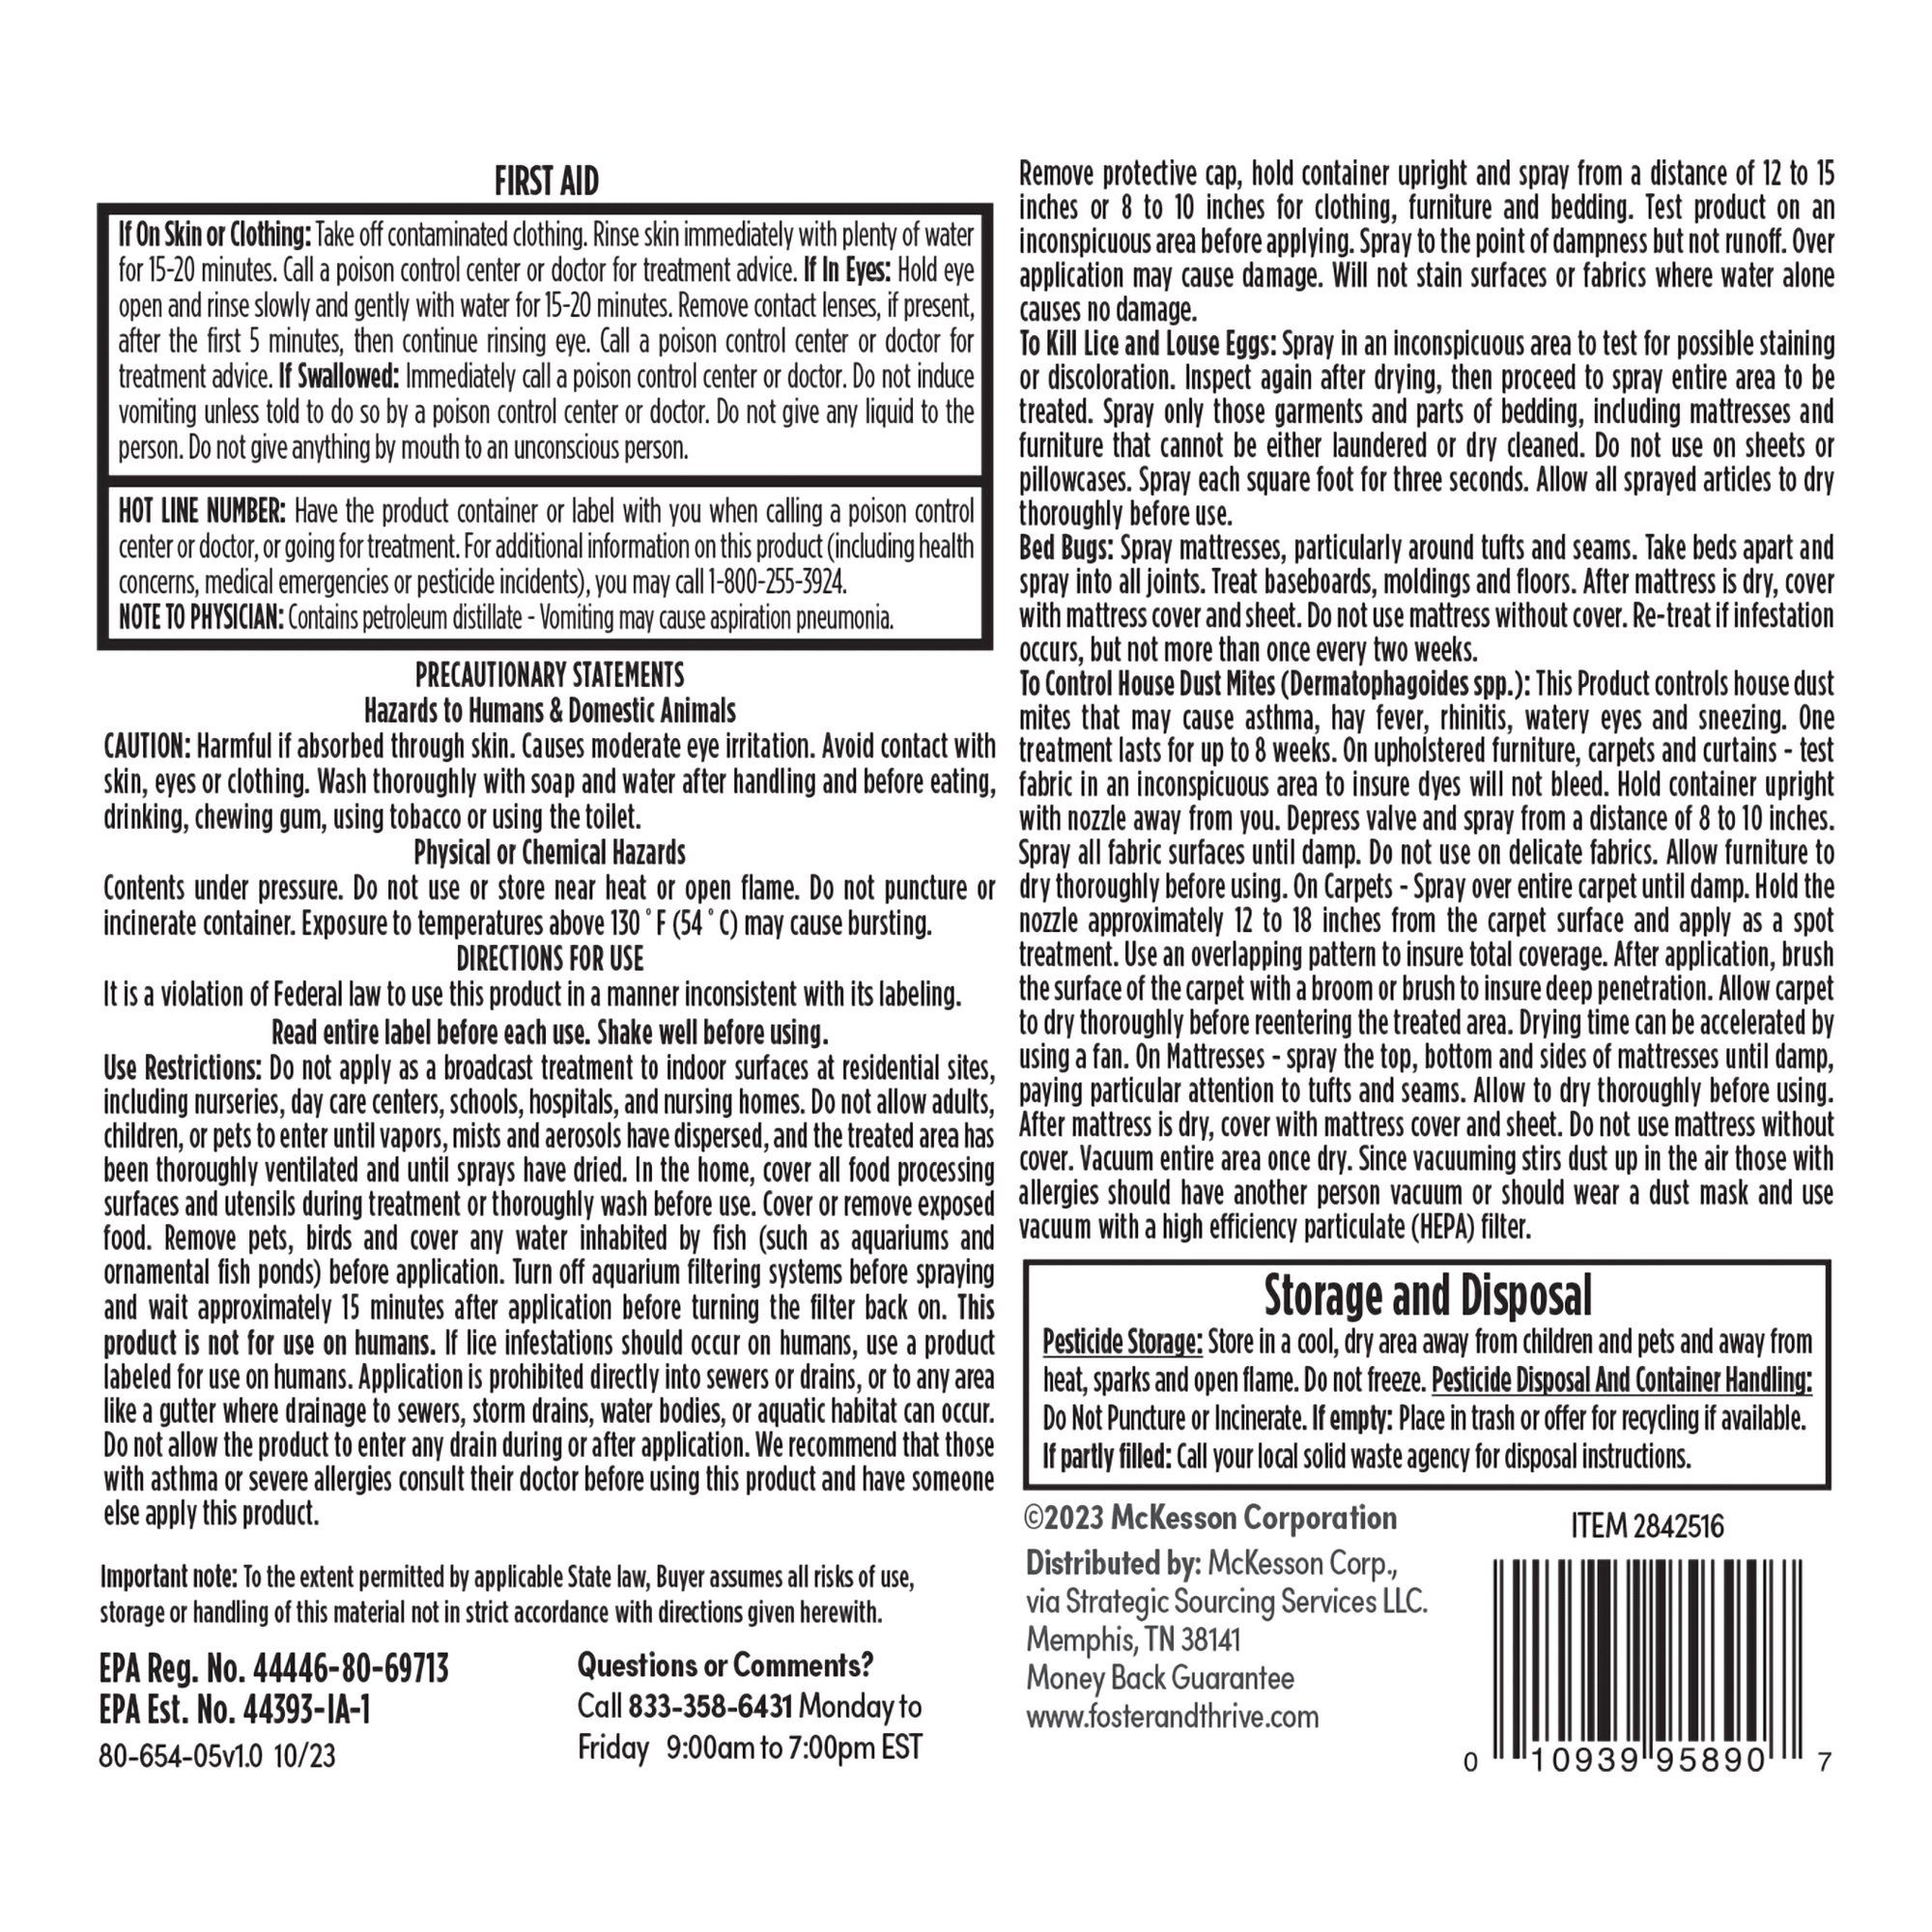 Foster & Thrive Lice, Bedbug & Mite Spray - 5 oz